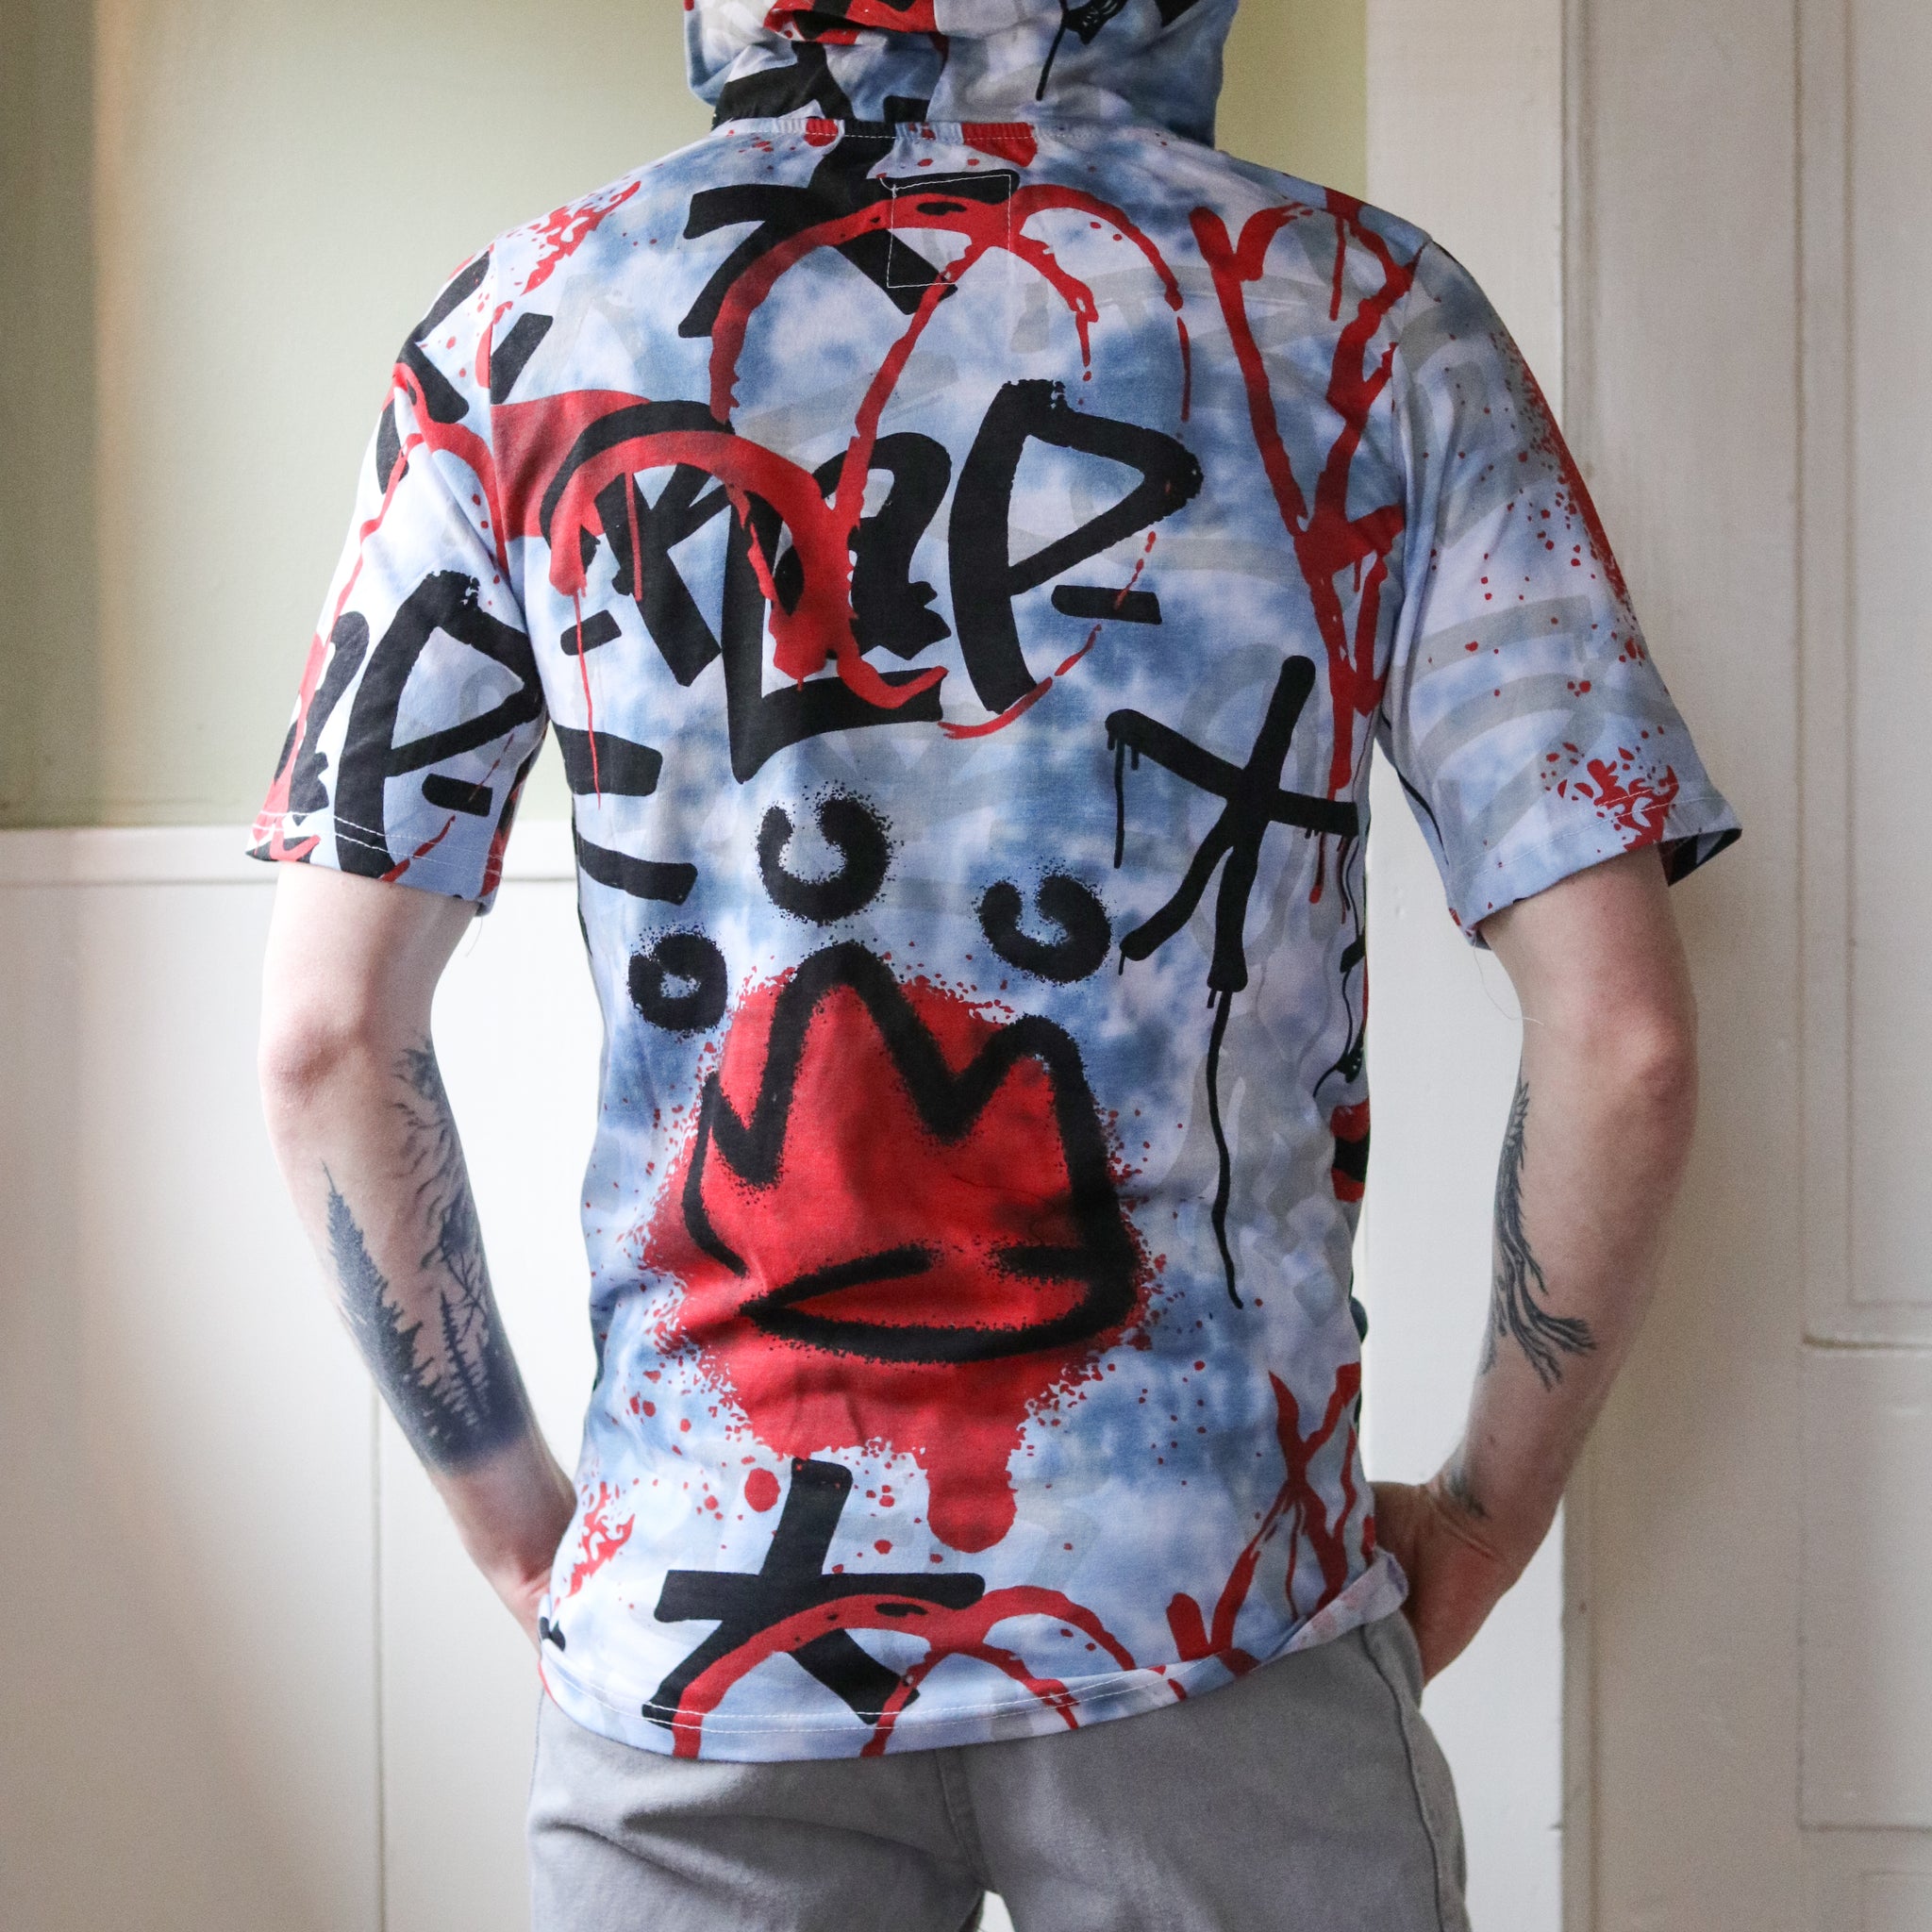 Graffiti hoodies